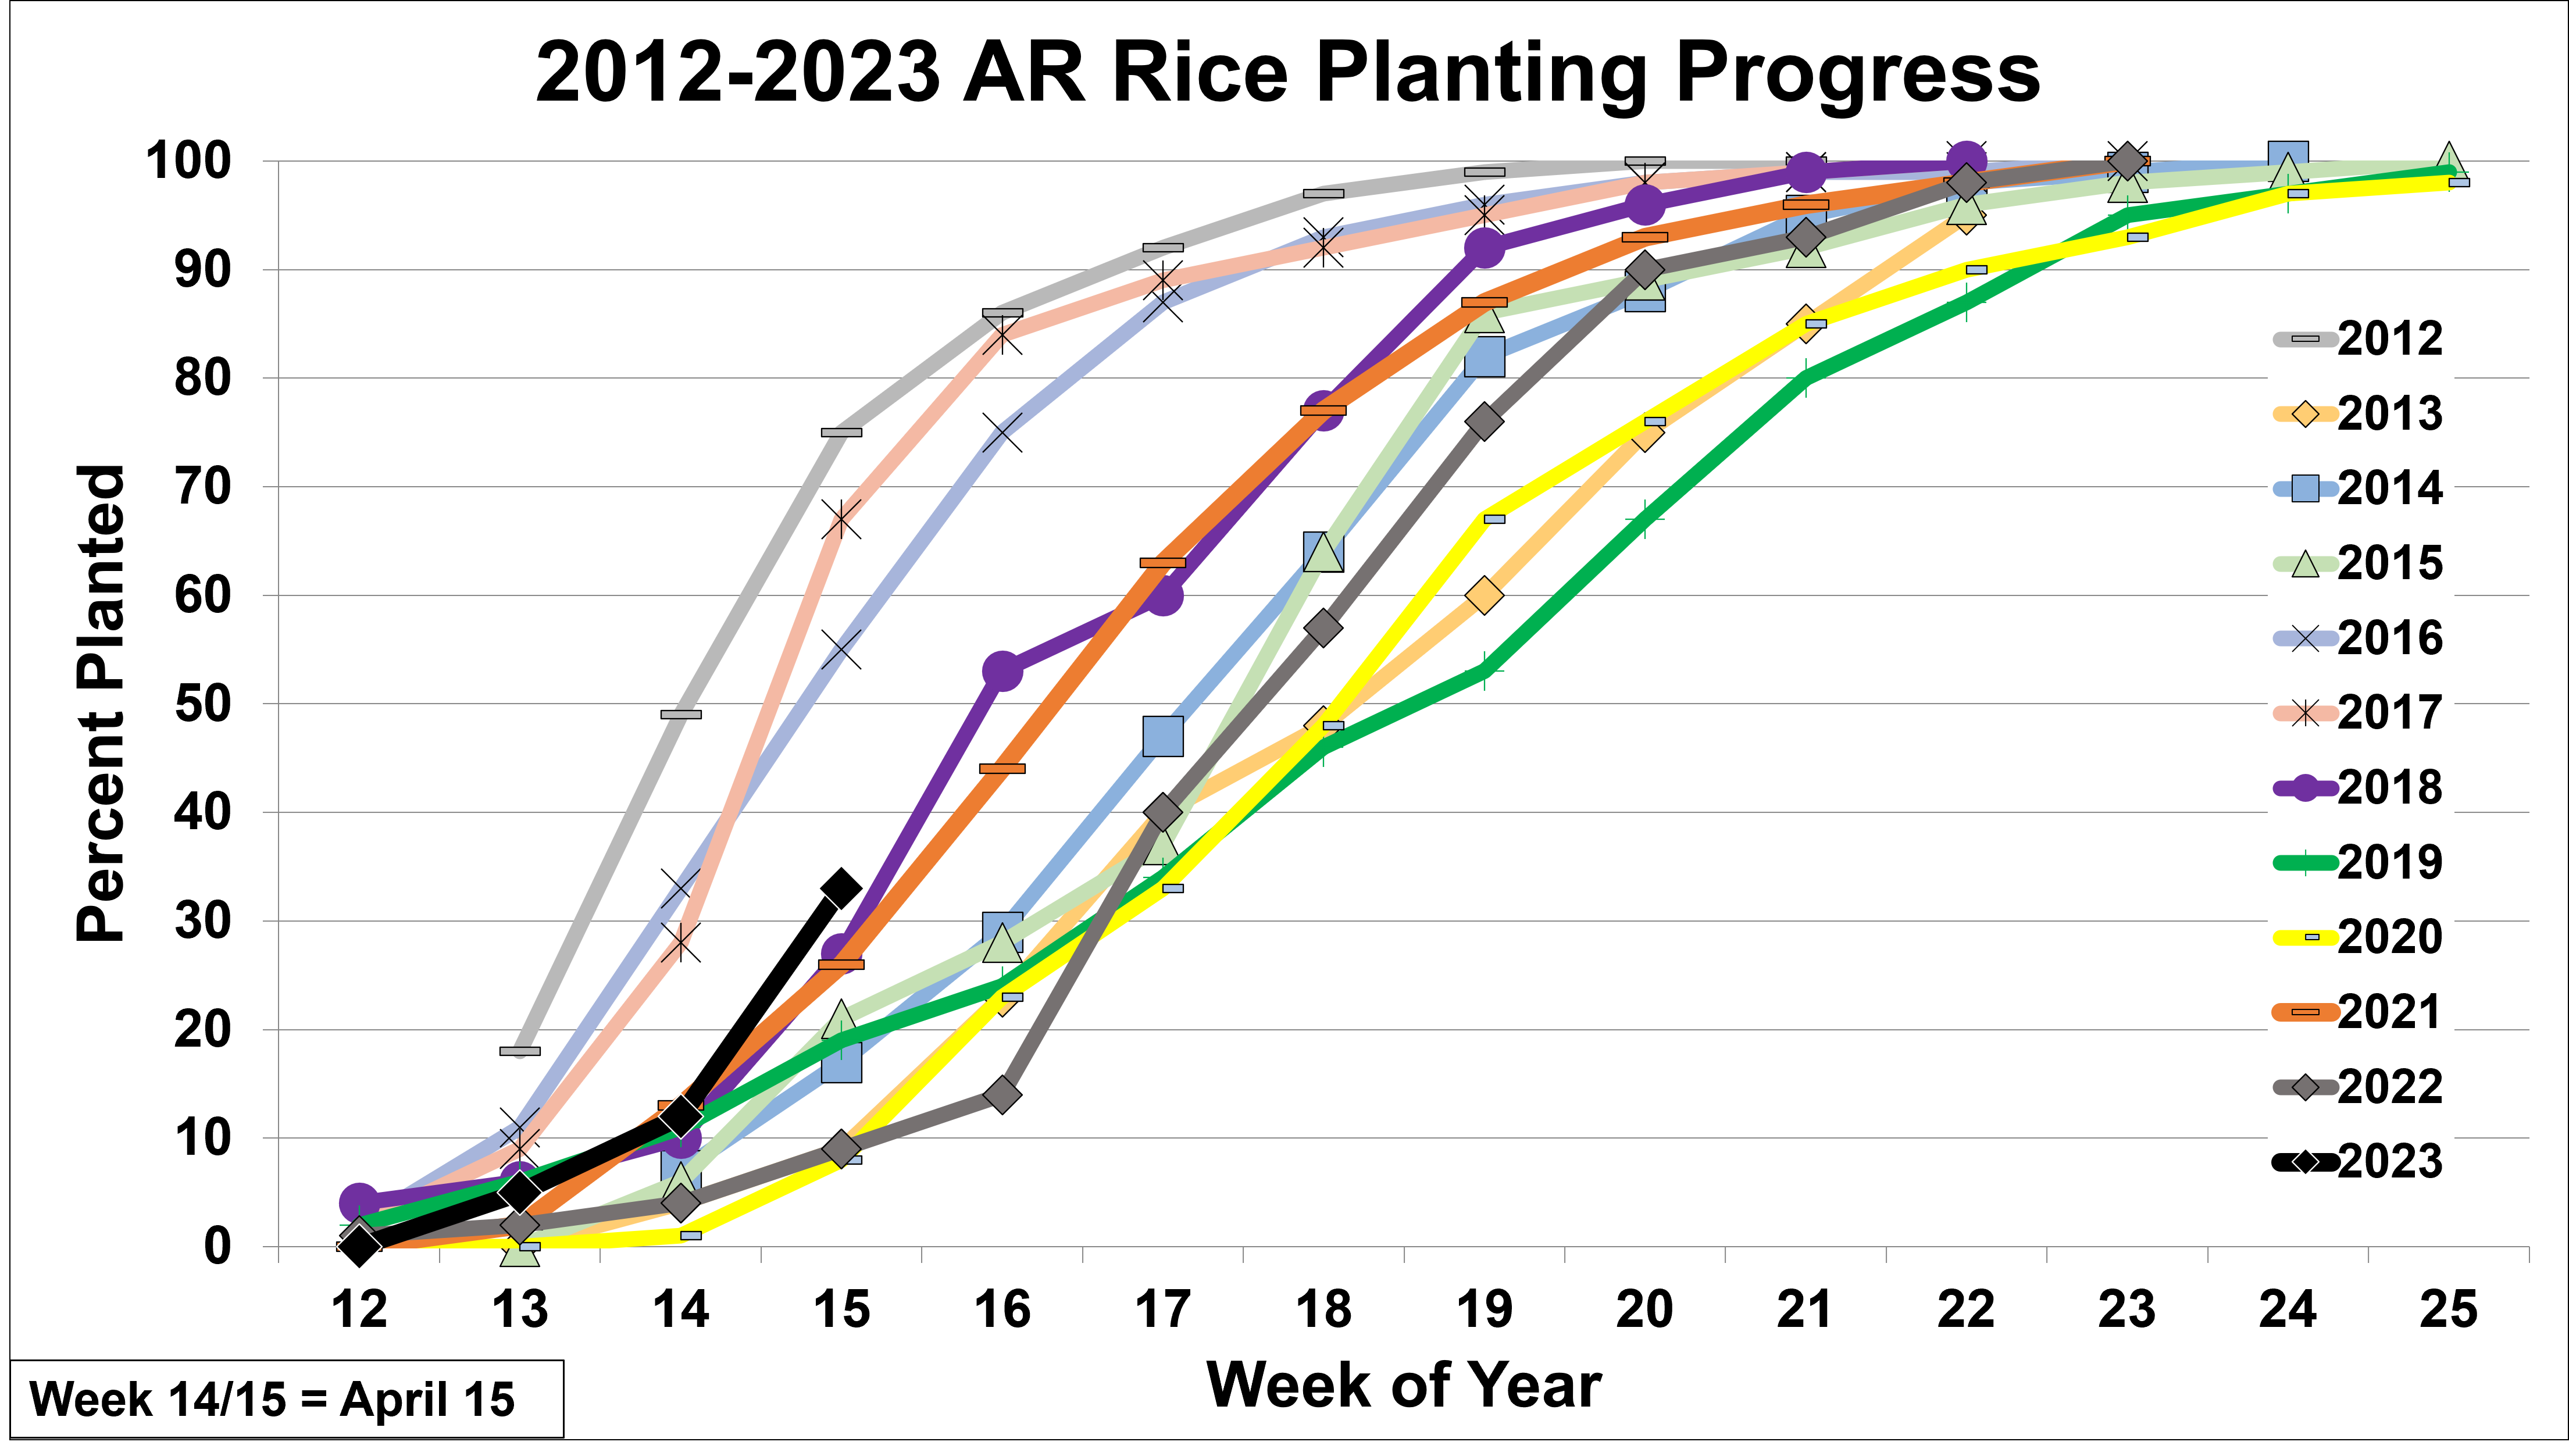 2012-2023 Arkansas rice planting progress by week